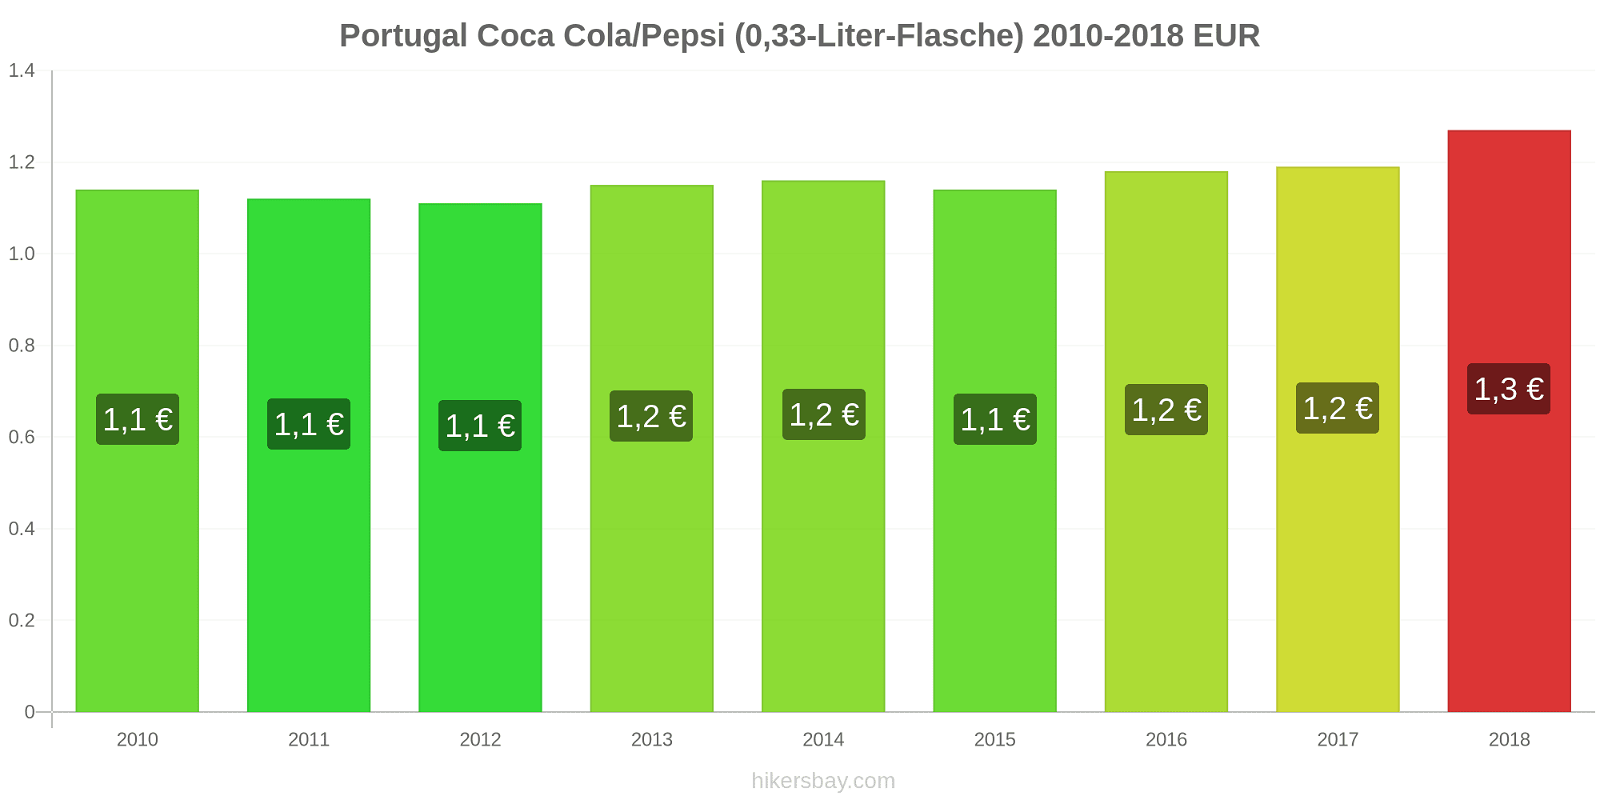 Portugal Preisänderungen Coke/Pepsi (0,33-Liter-Flasche) hikersbay.com